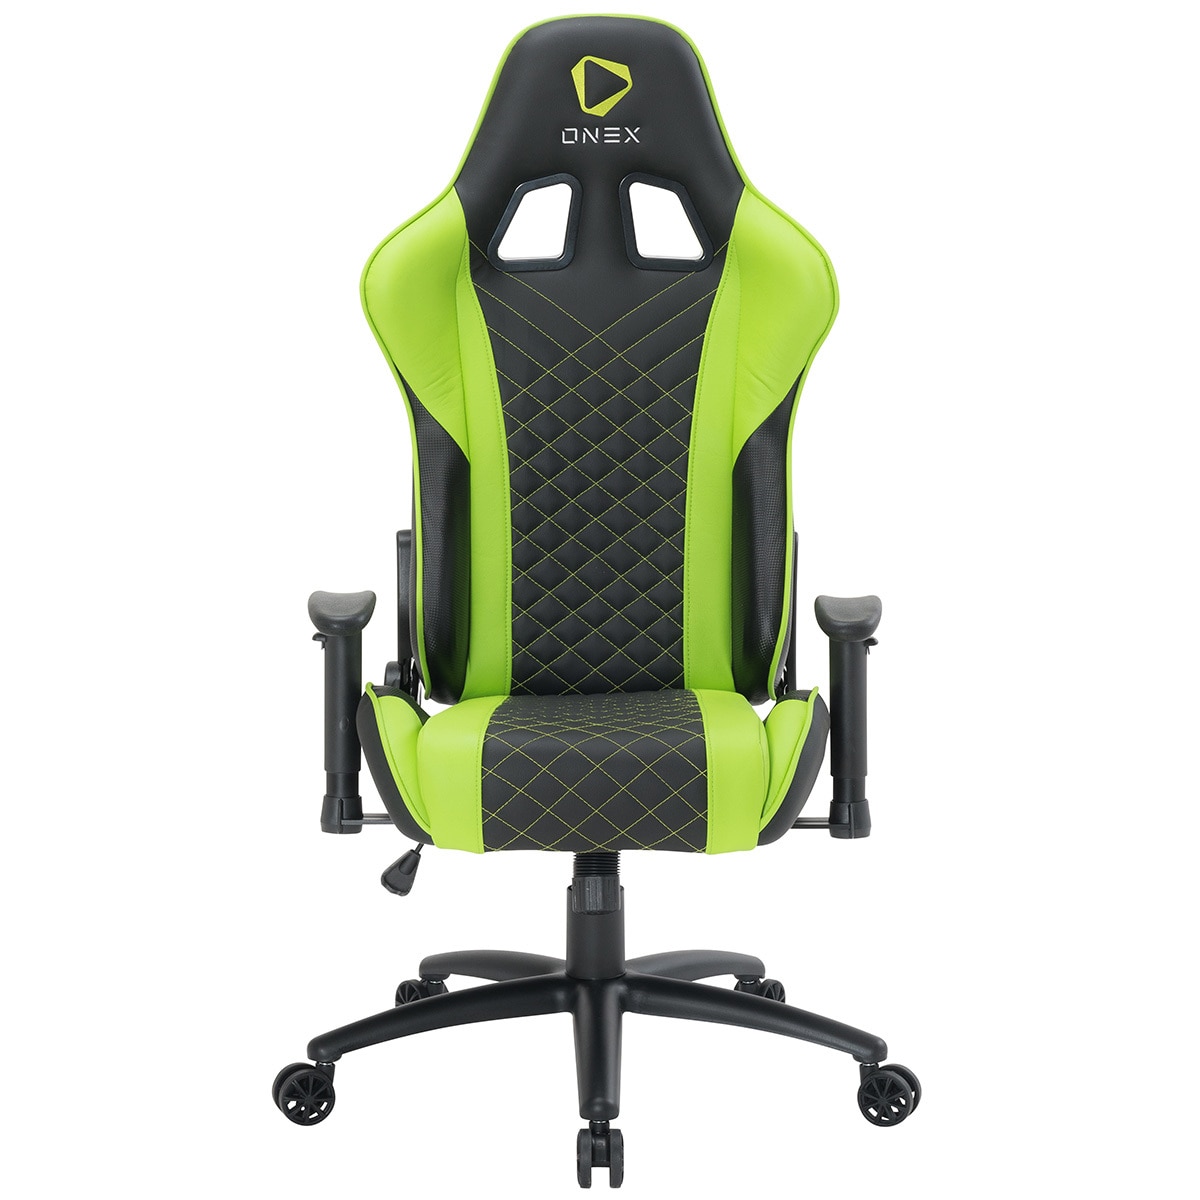 Onex Gaming Chair Gx3 Costco Australia